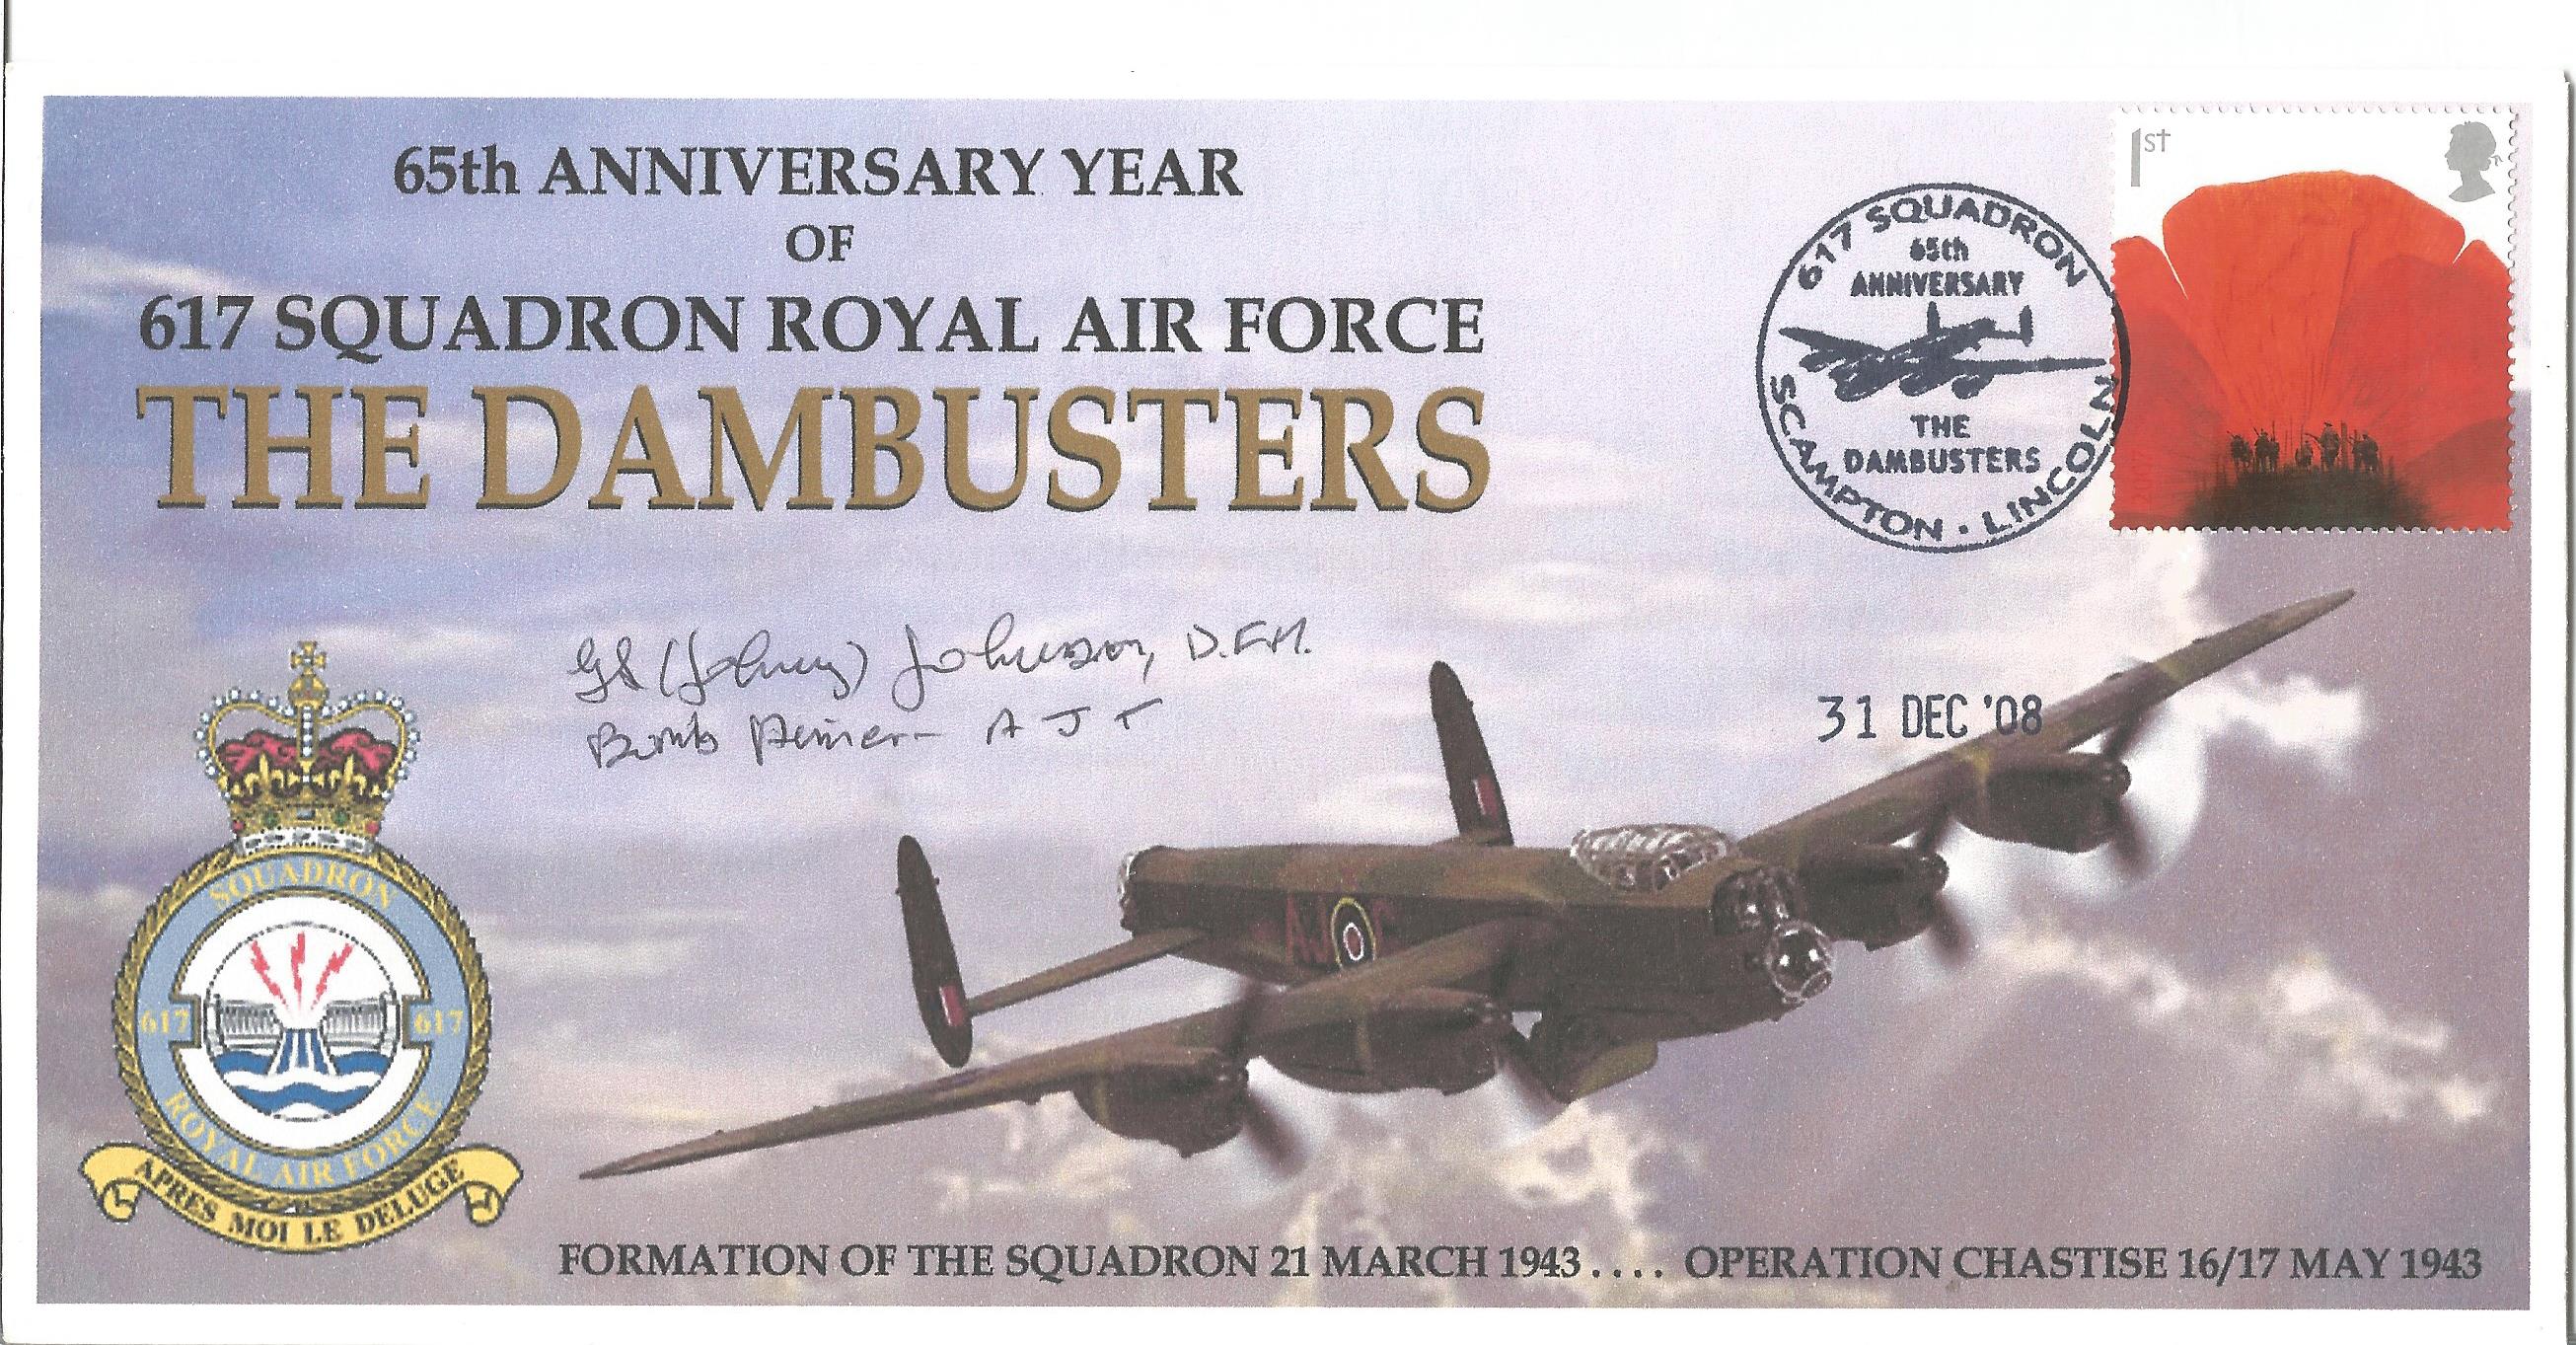 Dambusters Sqn Ldr. George Johnnie Johnson DFM Bomb Aimer, Dams Raid 1943 signed Cover commemorating